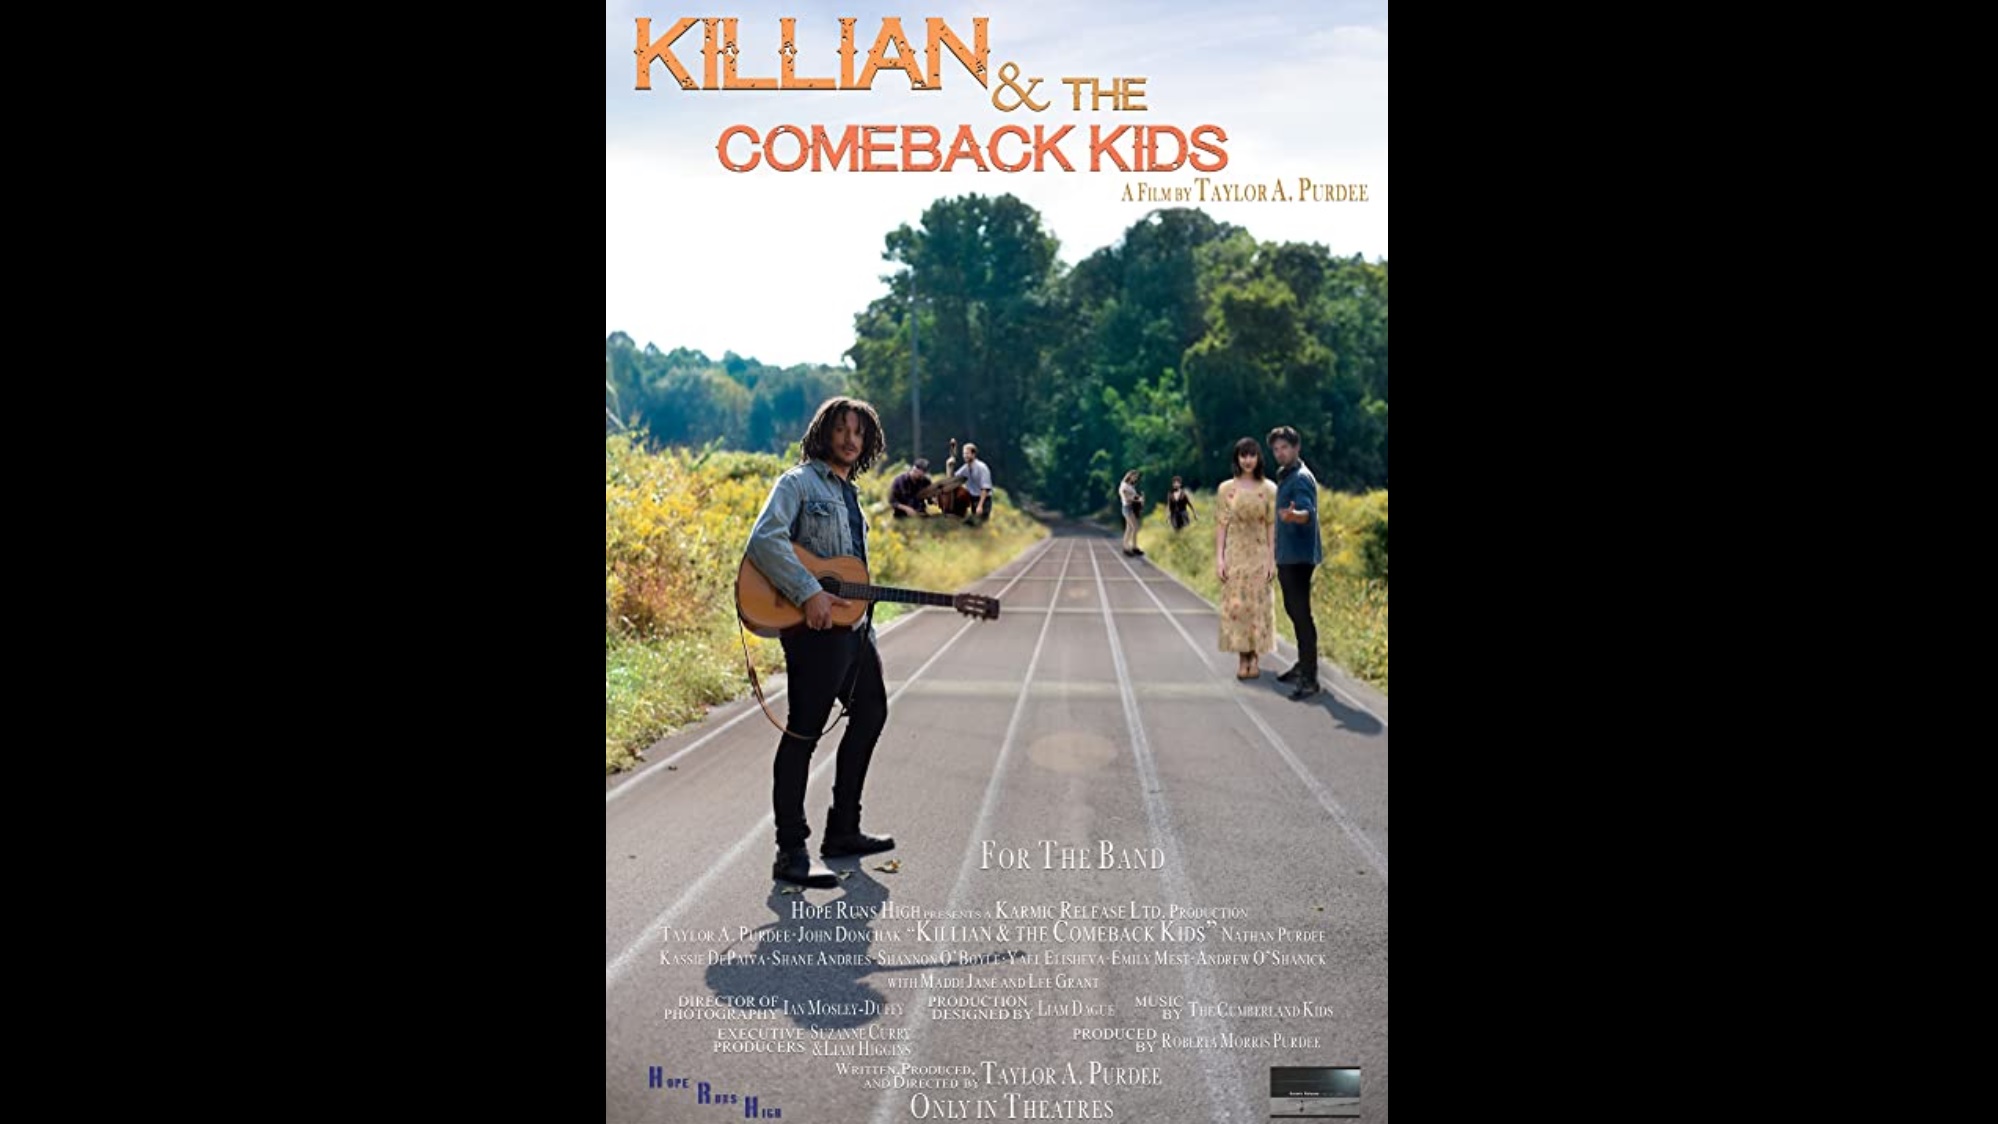 Killian and the comeback kids poster